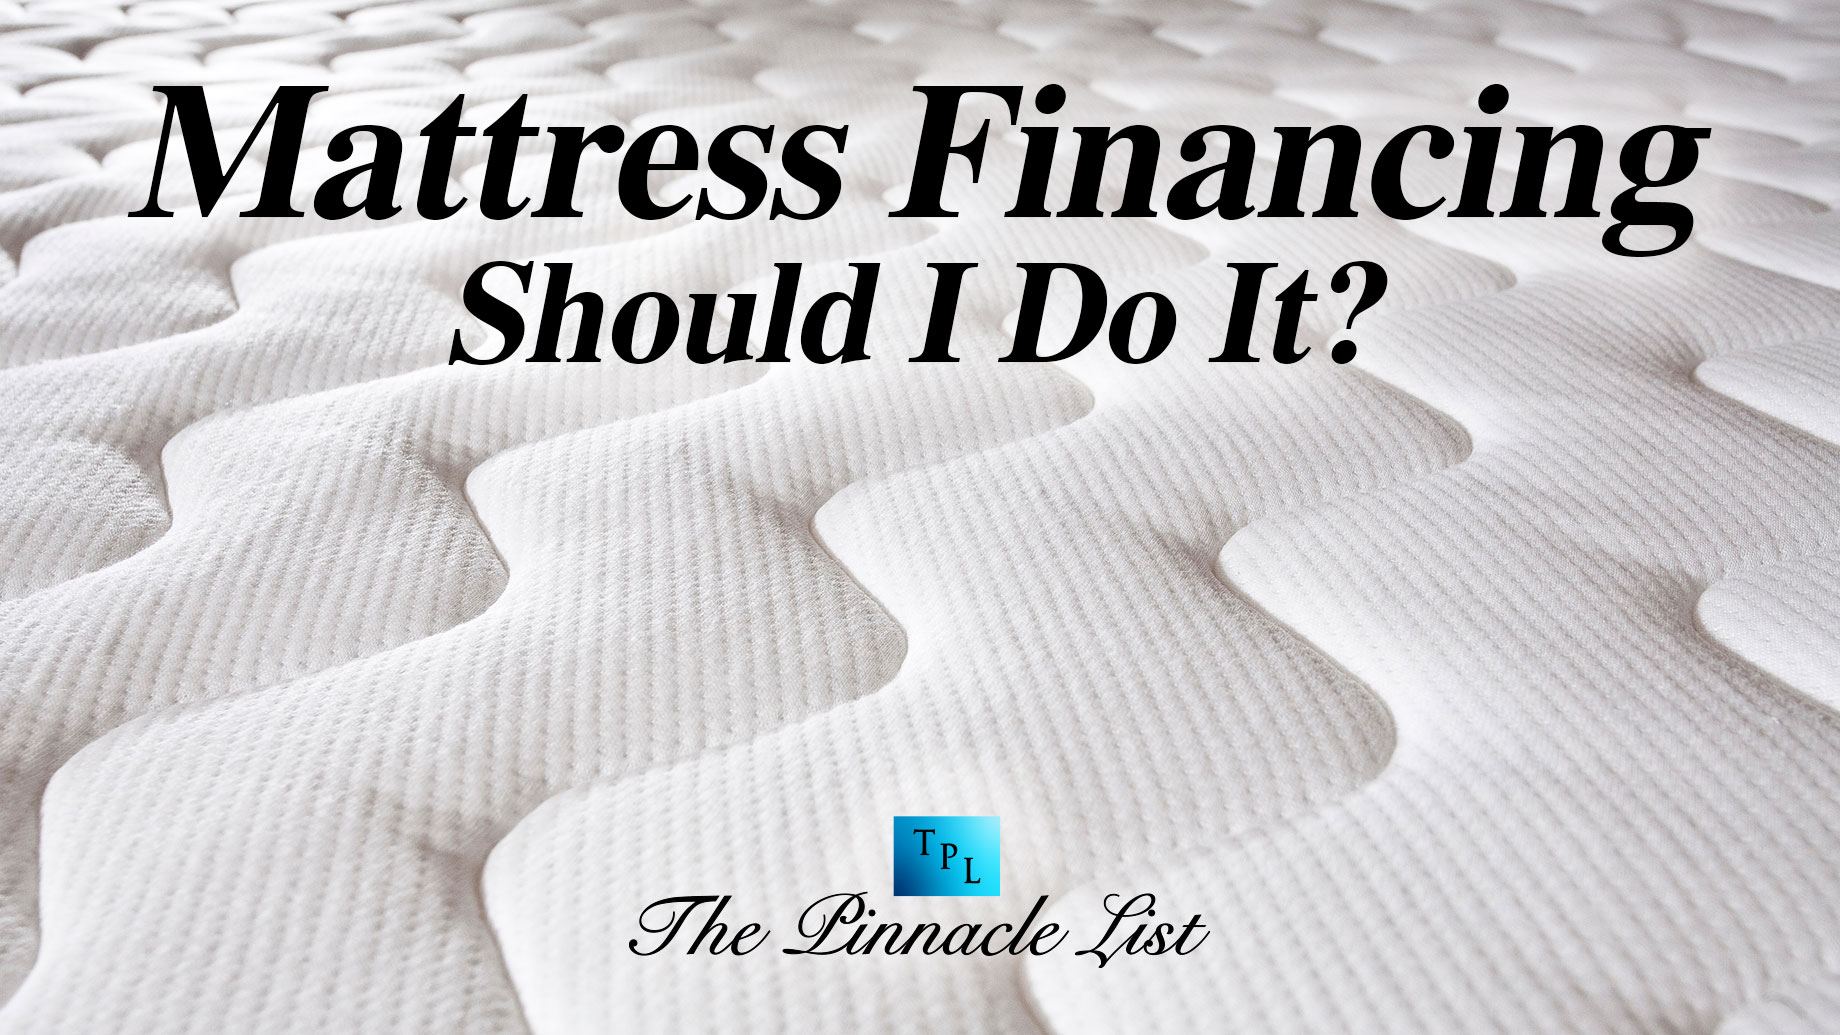 Mattress Financing: Should I Do It?